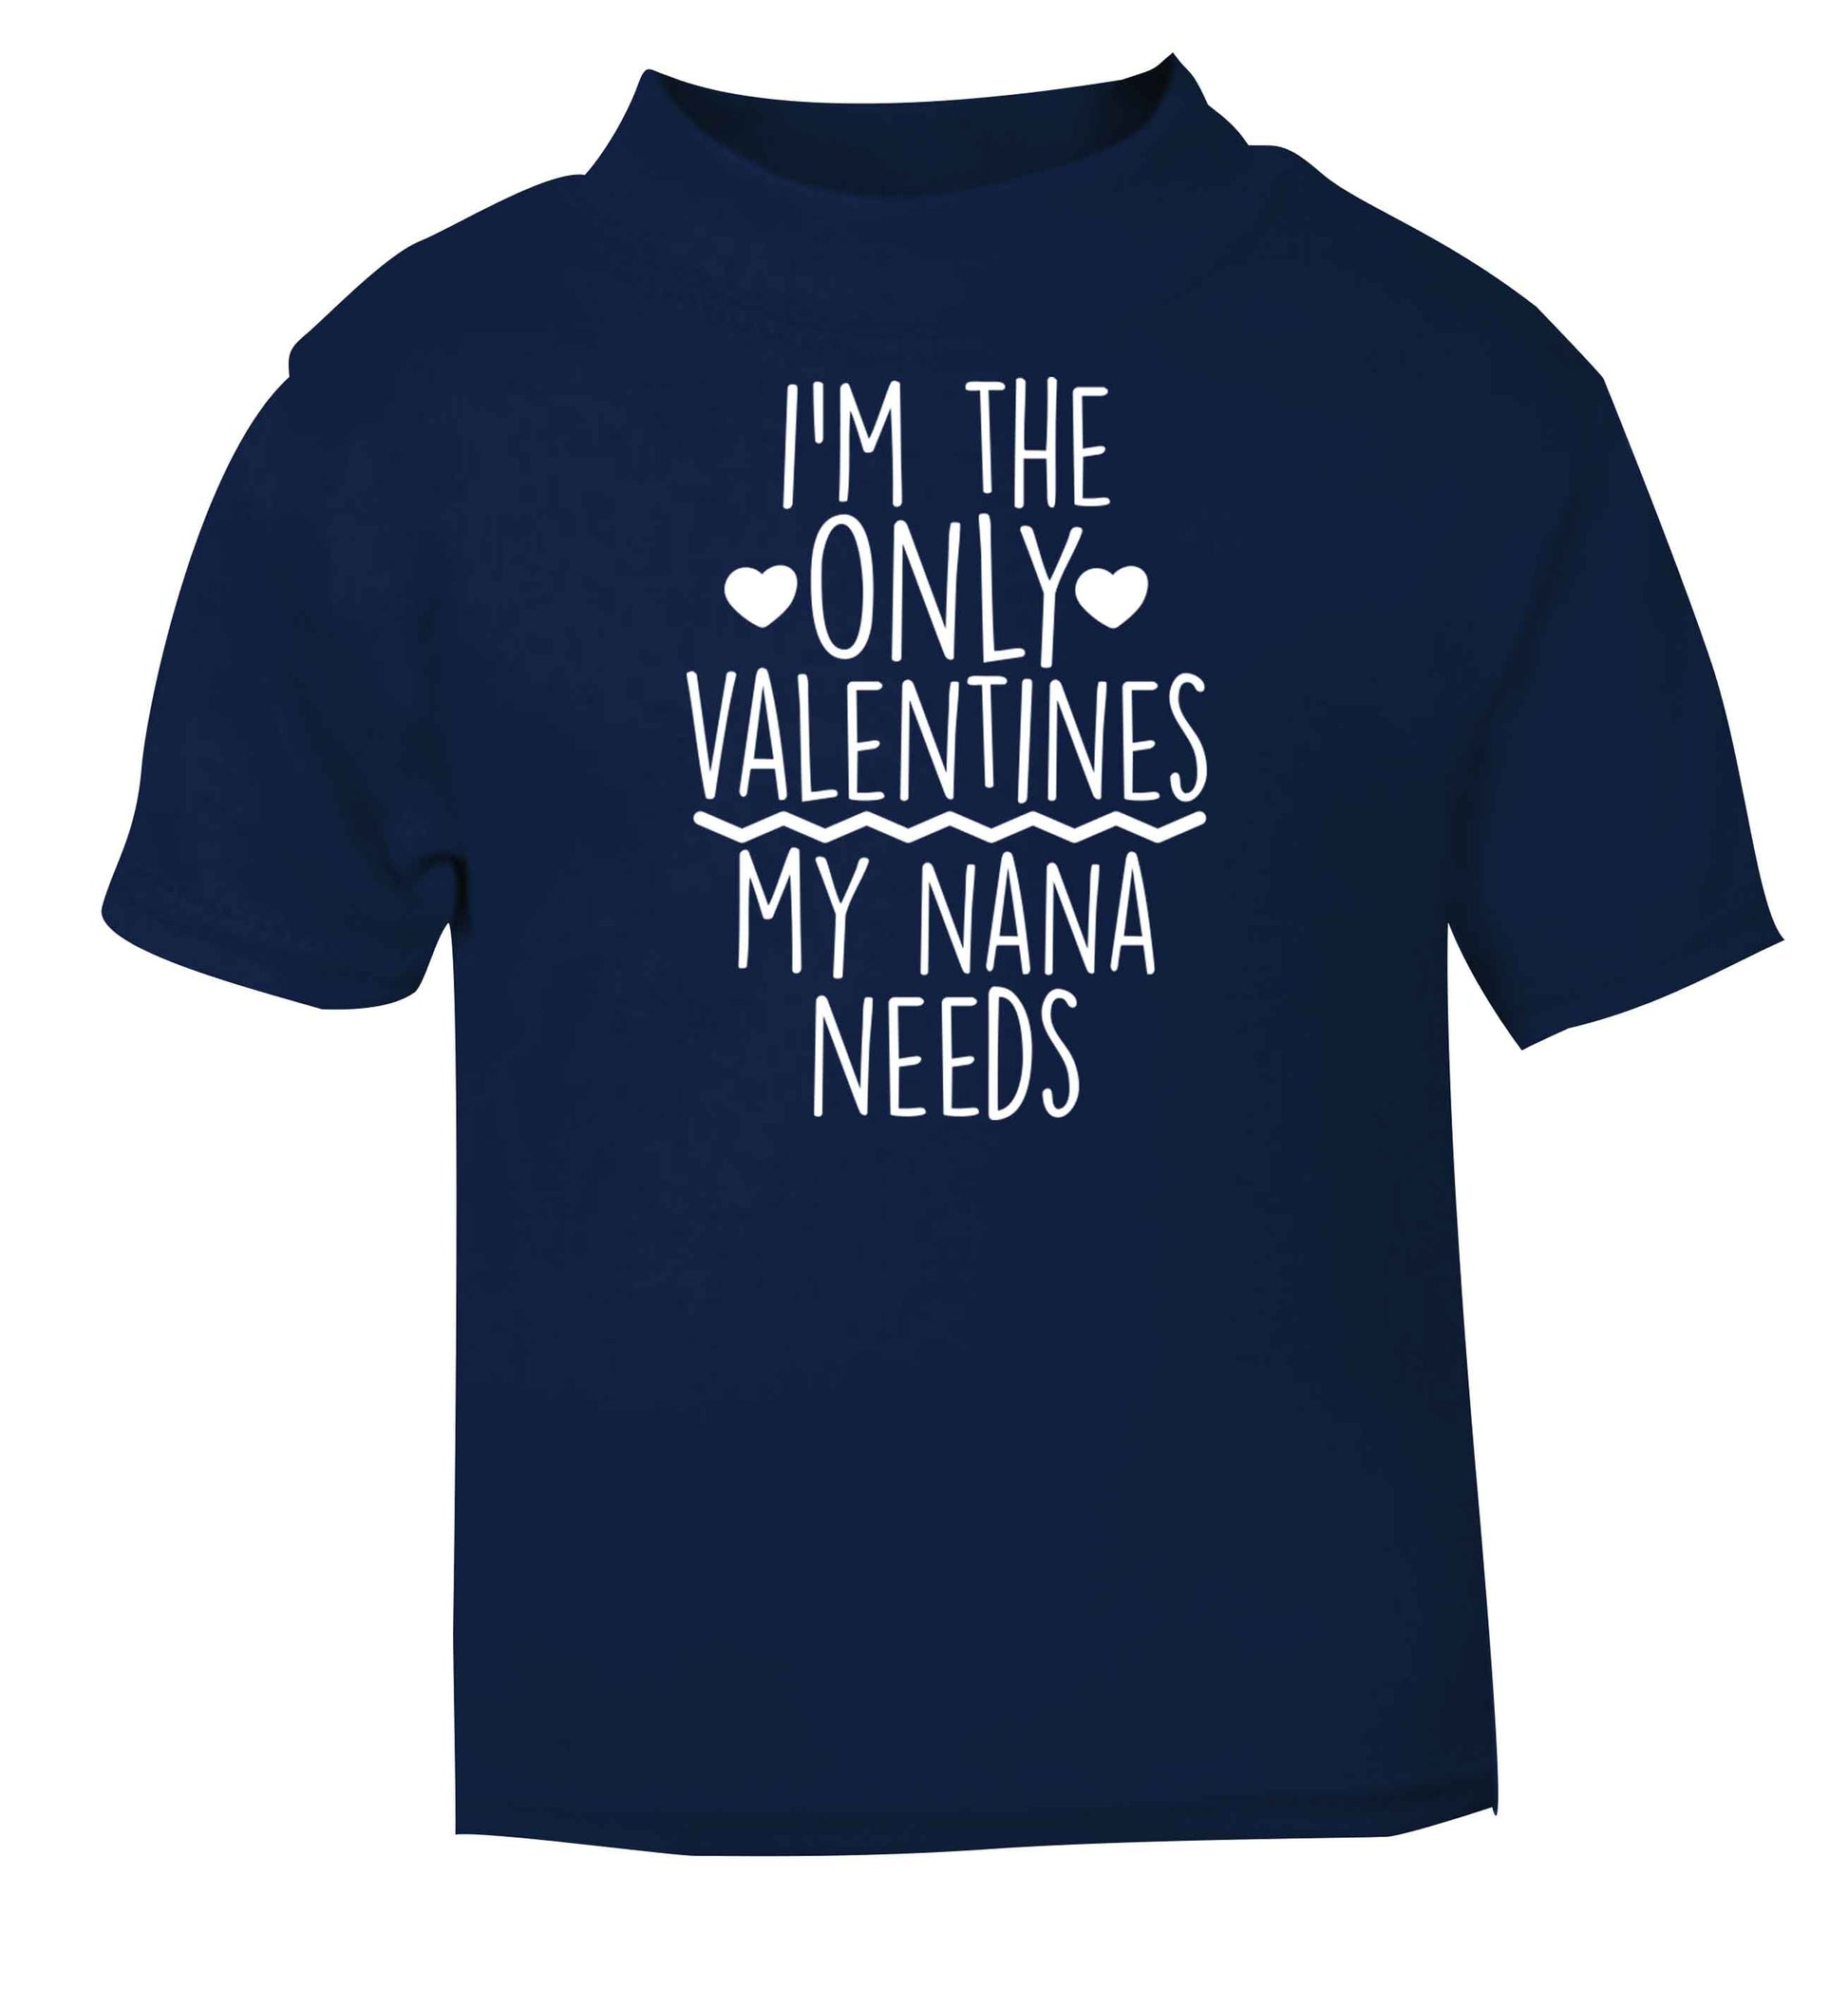 I'm the only valentines my nana needs navy baby toddler Tshirt 2 Years